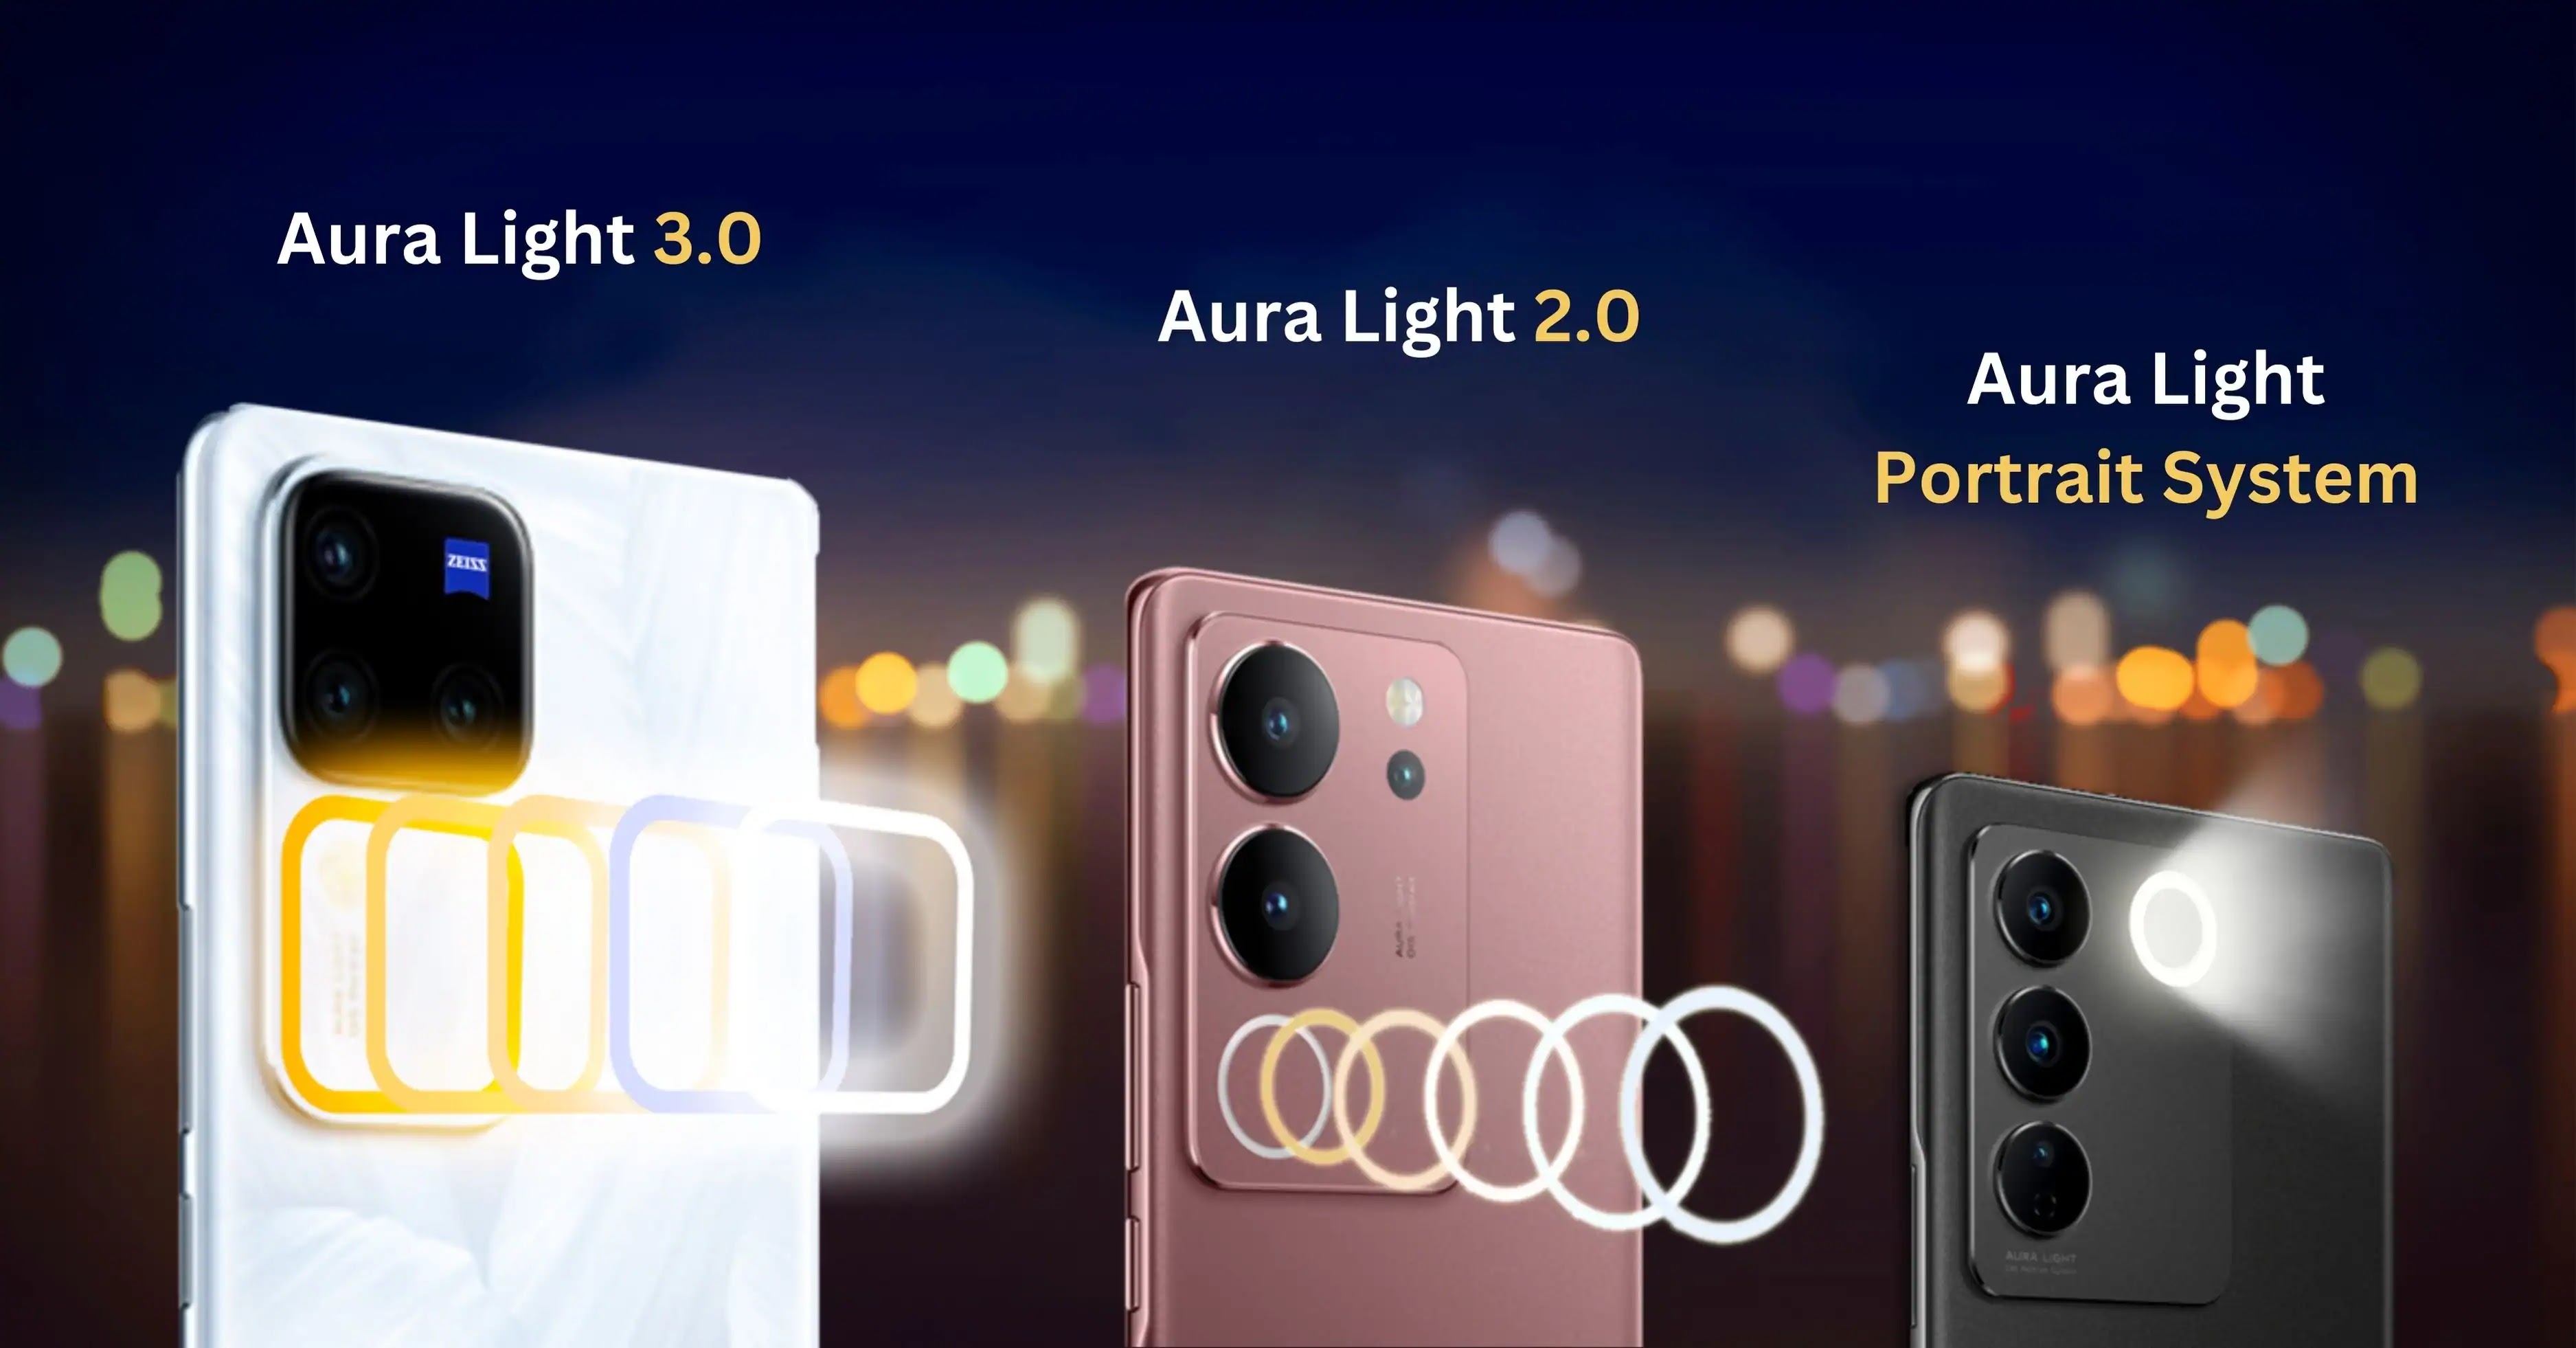 Evolution of Aura Light